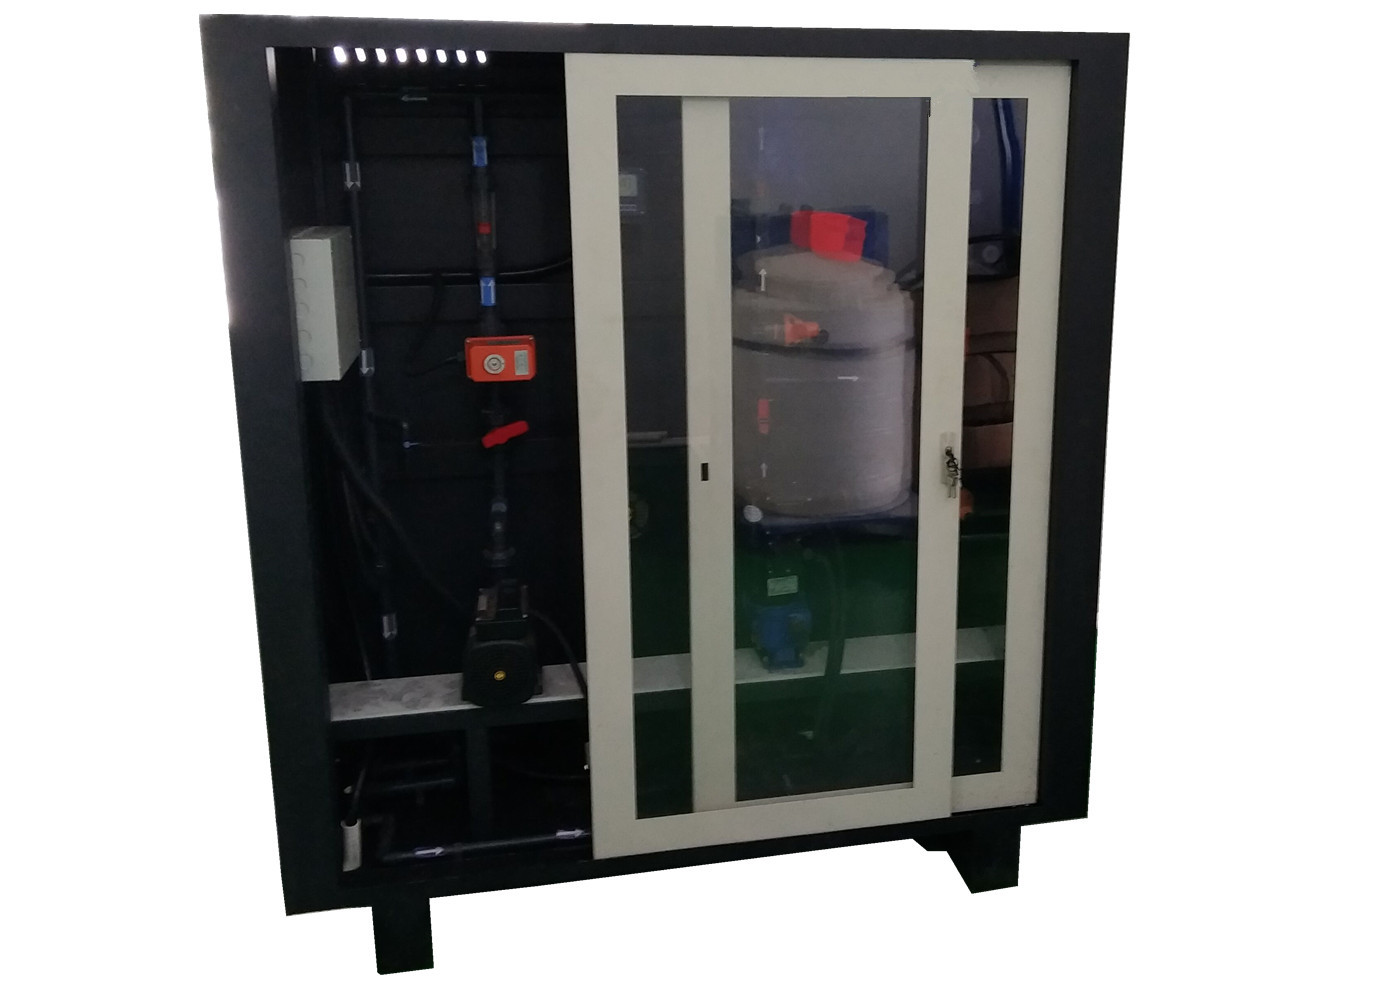 China PLC Control Sodium Hypochlorite Generator Gas Chlorination System By Brine Electrolysis wholesale